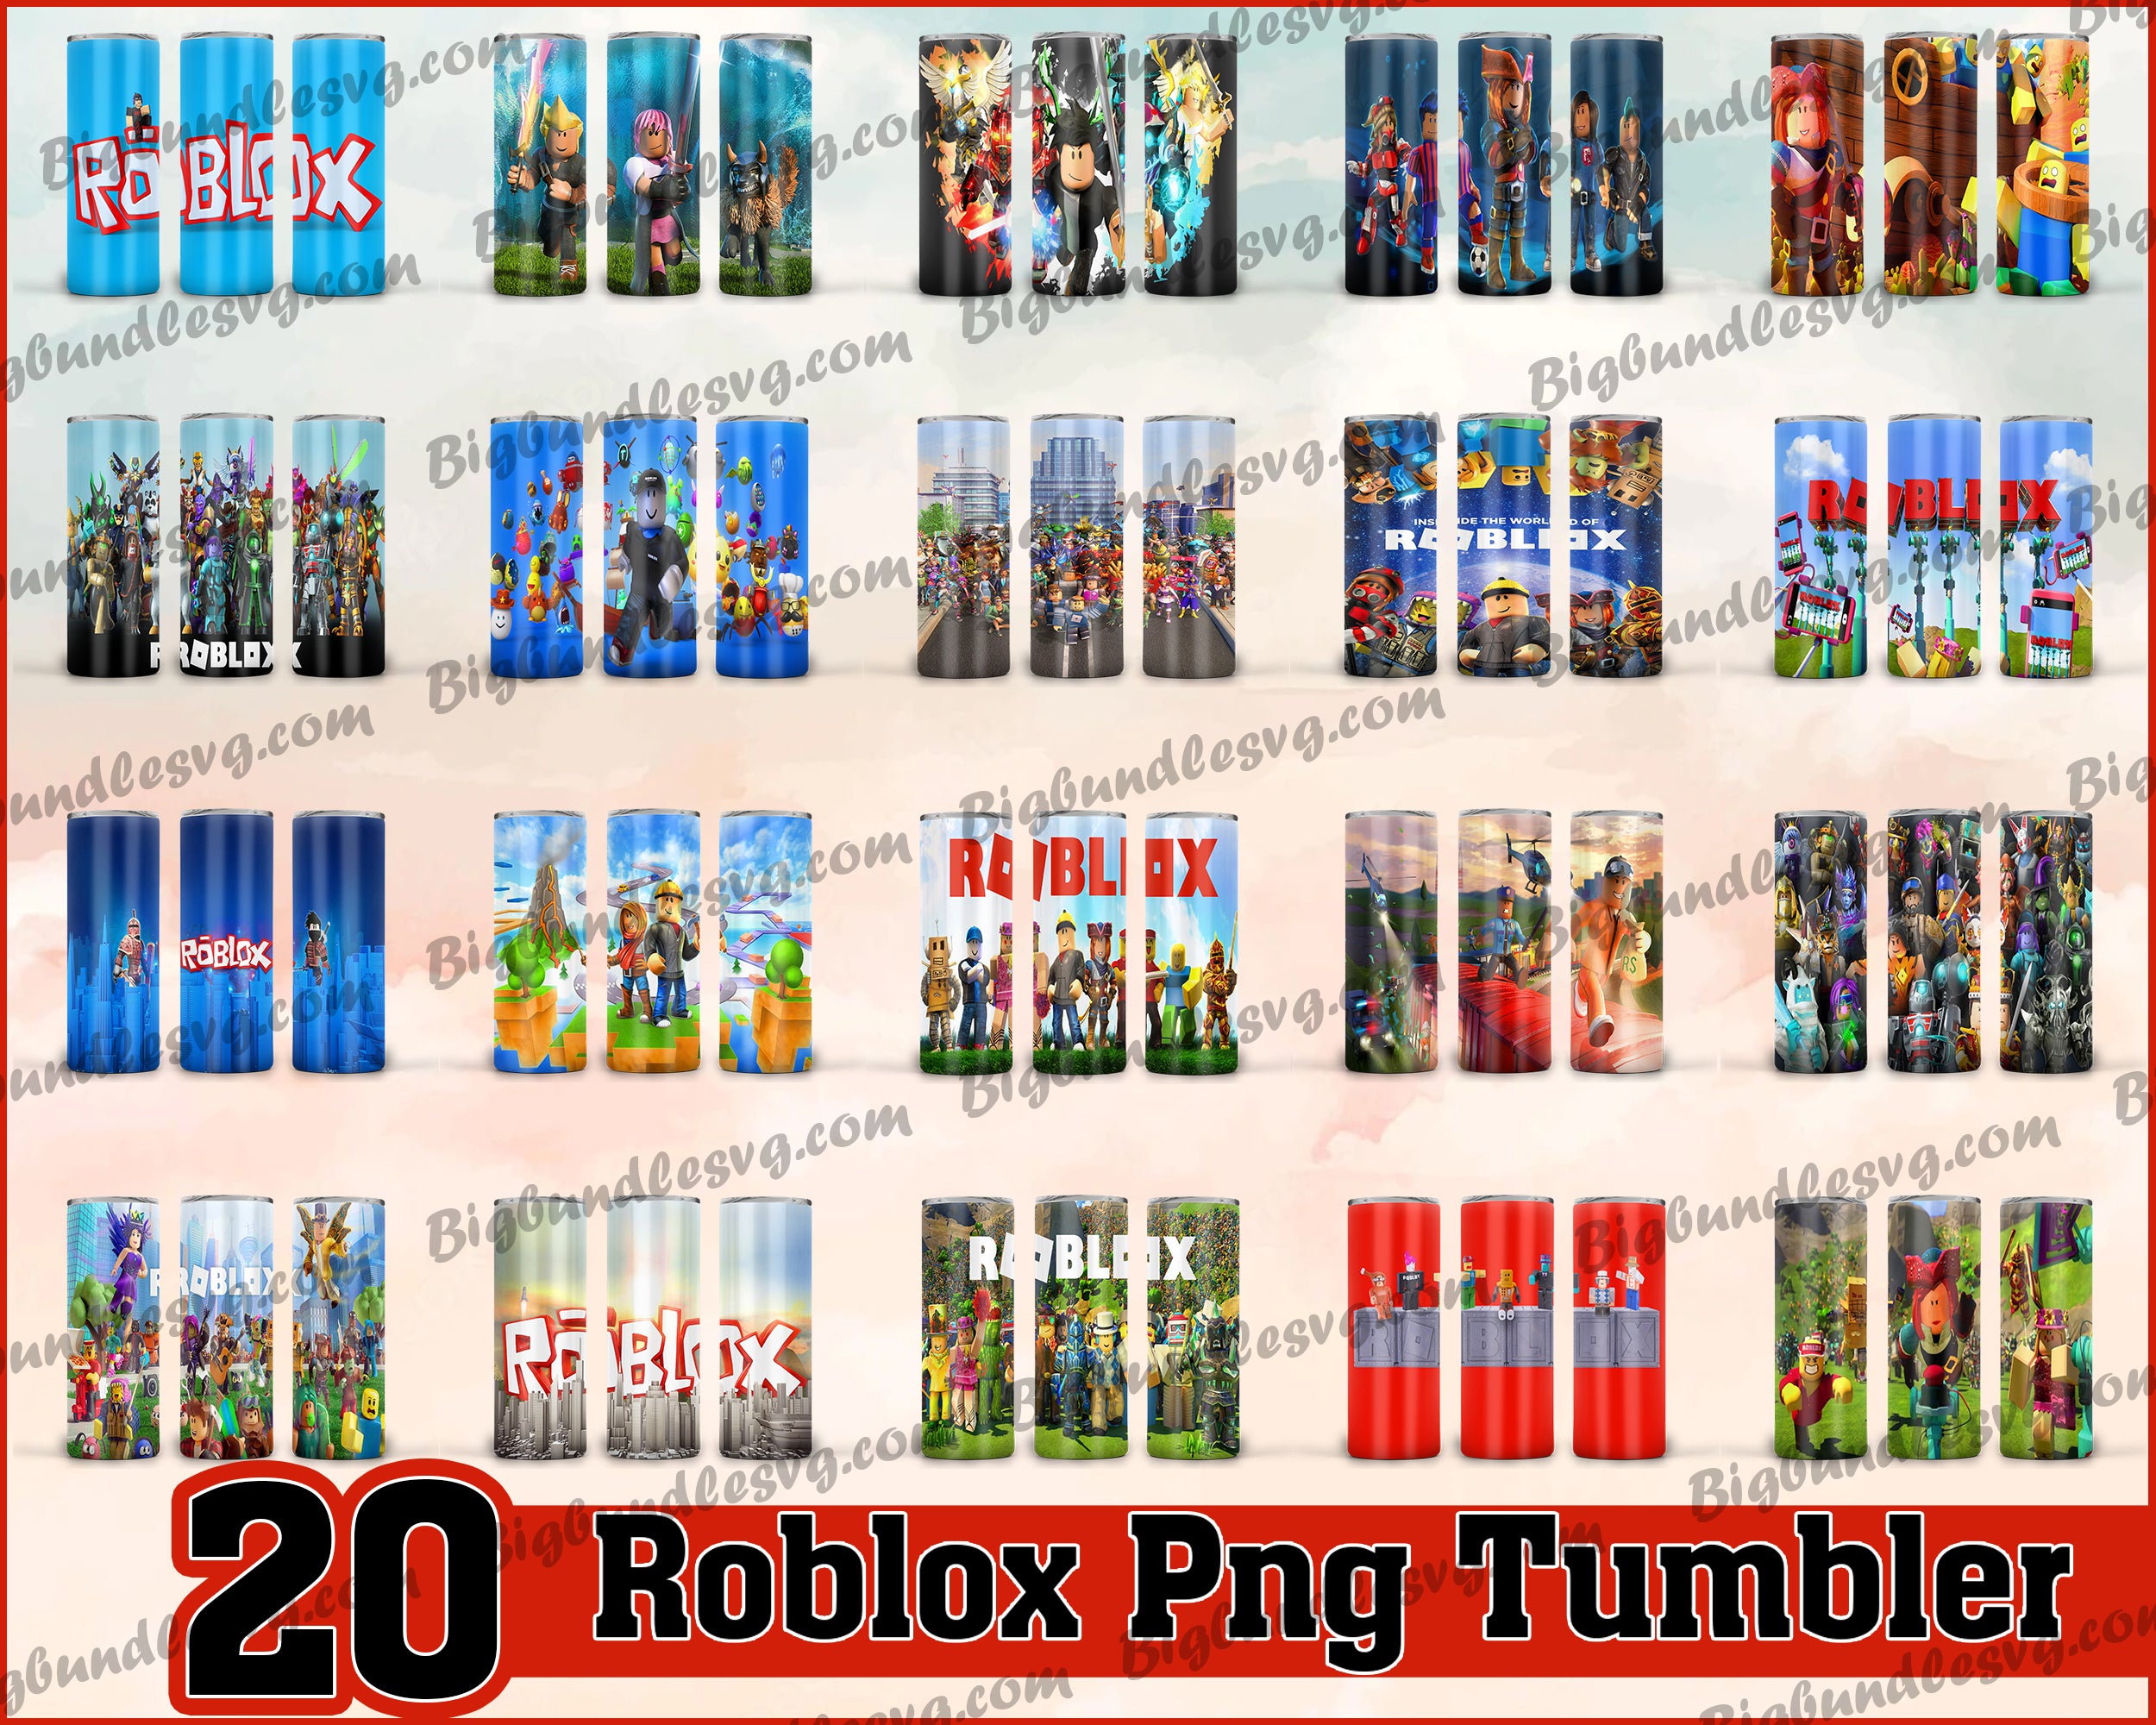 Roblox Tumbler - Roblox PNG - Tumbler design - Digital download